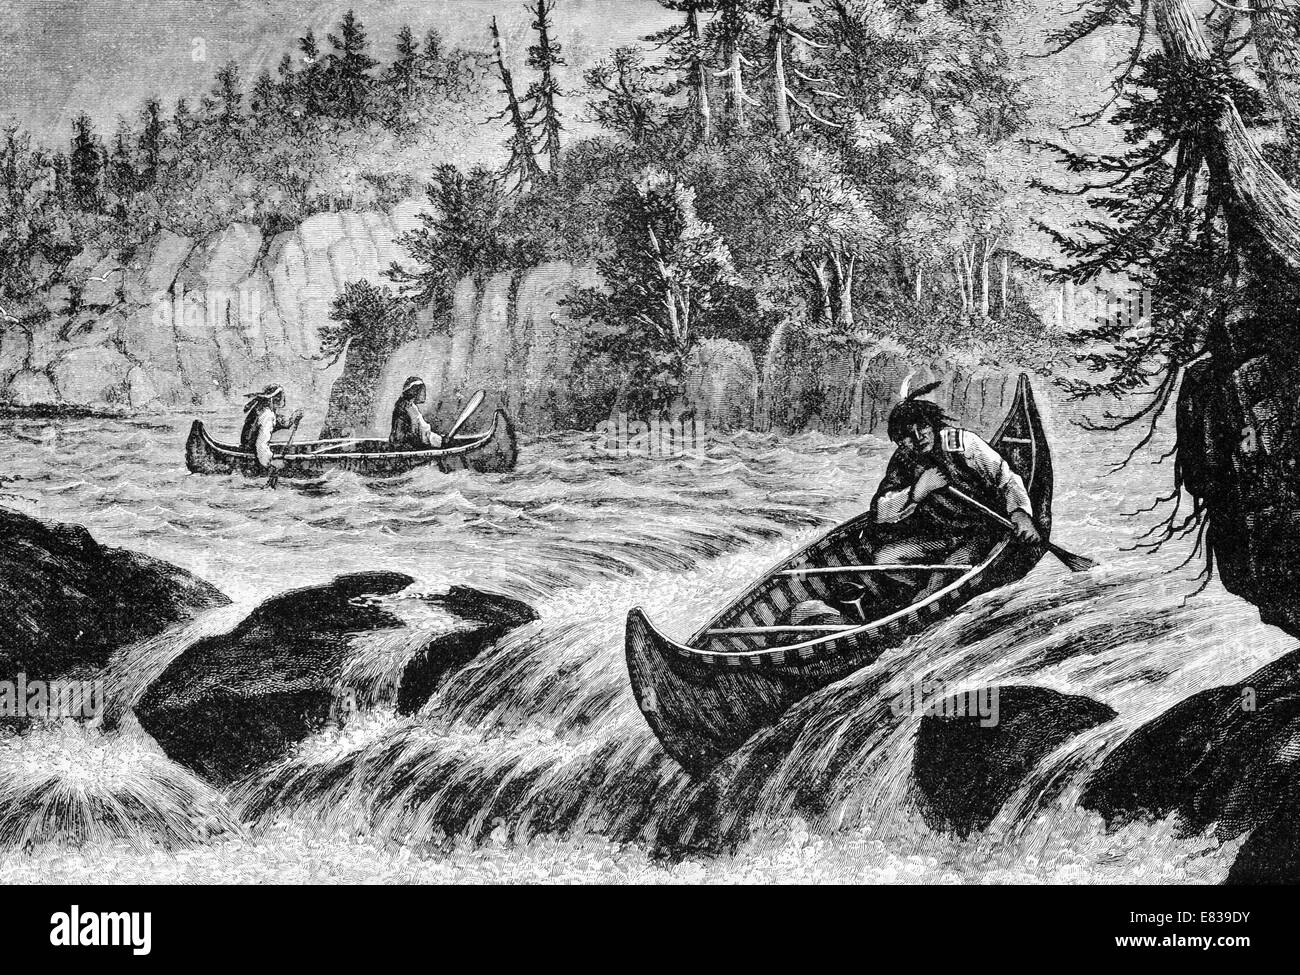 North American Indian skin Canoe shooting river rapids circa 1885 Stock Photo